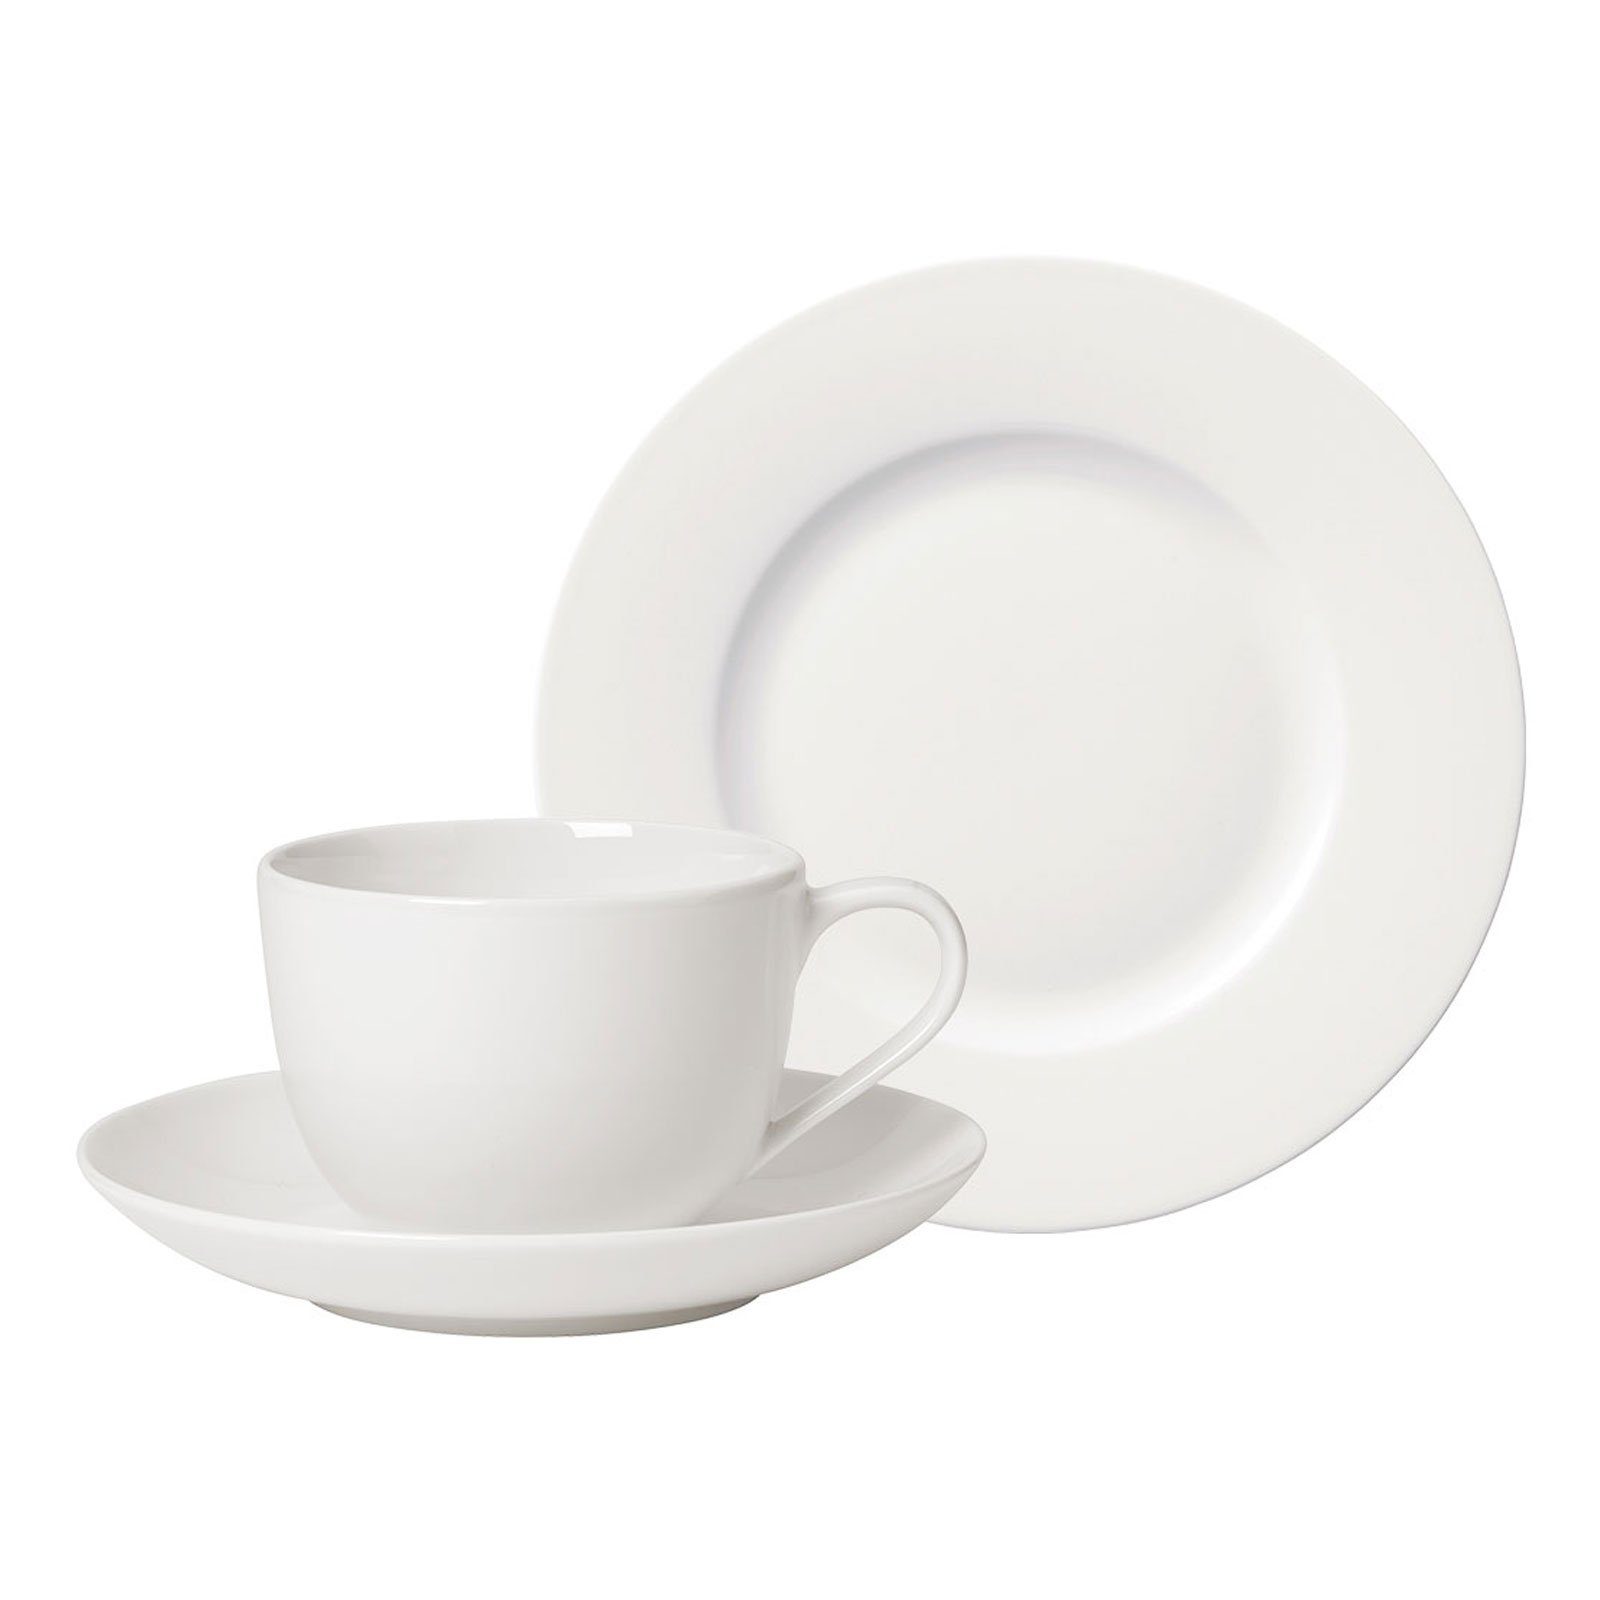 Villeroy & Boch Tafelservice »For Me Kaffeeservice« (18-tlg), Premium  Porzellan online kaufen | OTTO